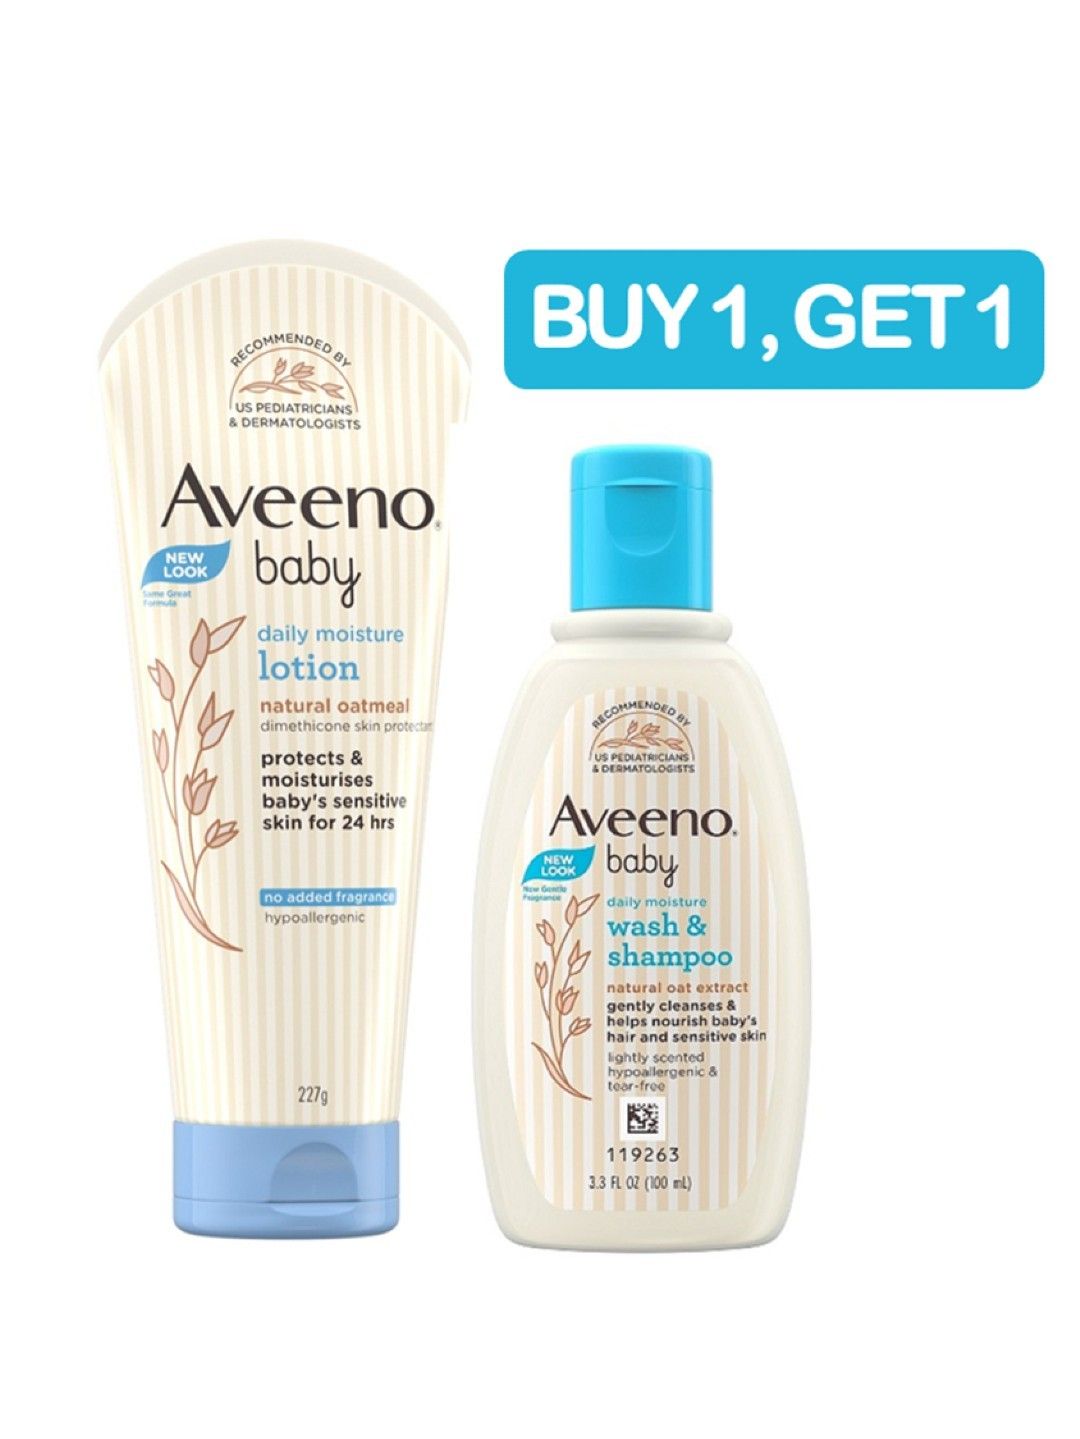 Aveeno Baby Daily Moisture Lotion 227g + FREE Daily Wash & Shampoo 100ml